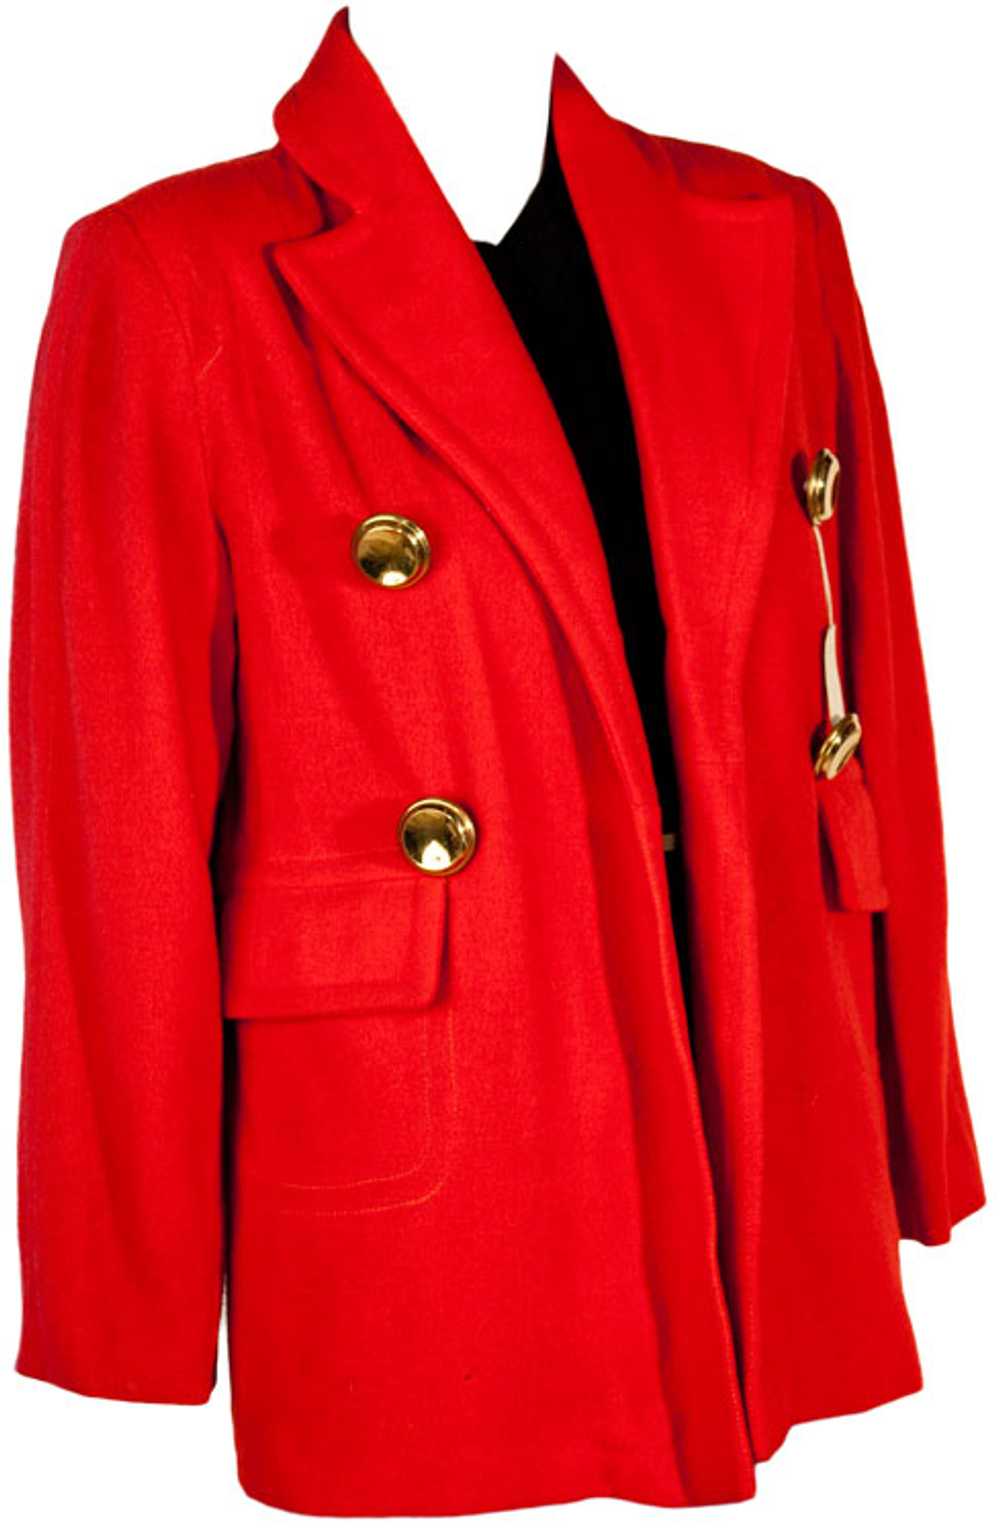 1950s Bold Red Jacket - image 1